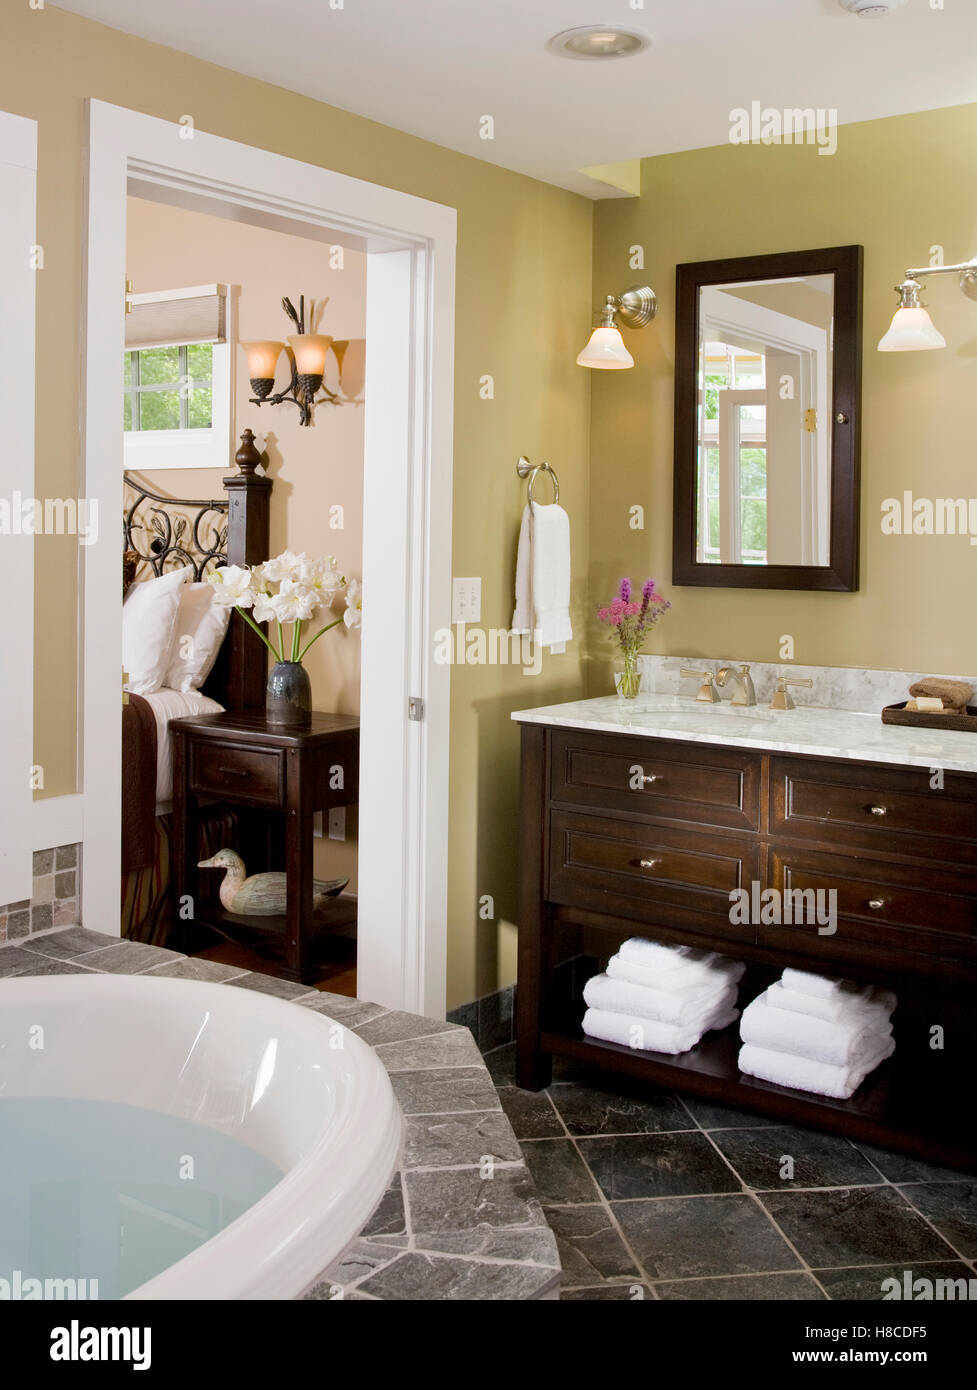 Bathroom with tiled floor and mahogany storage unit, New Hampshire, USA. Stock Photo